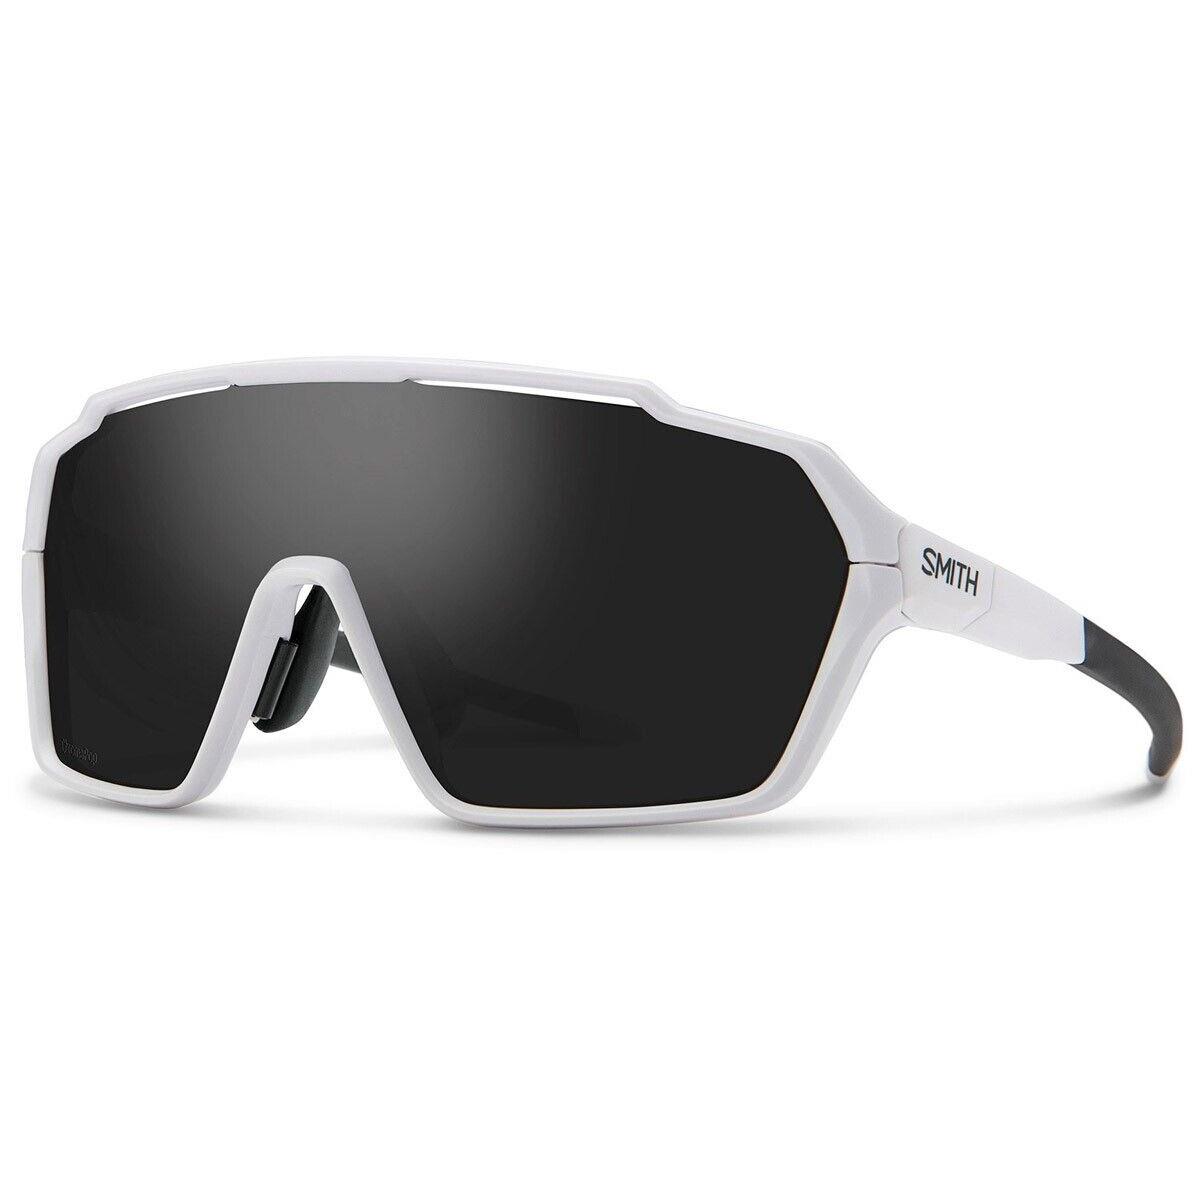 Smith Shift Mag Sunglasses Matte White Frame Chromapop Black Lens